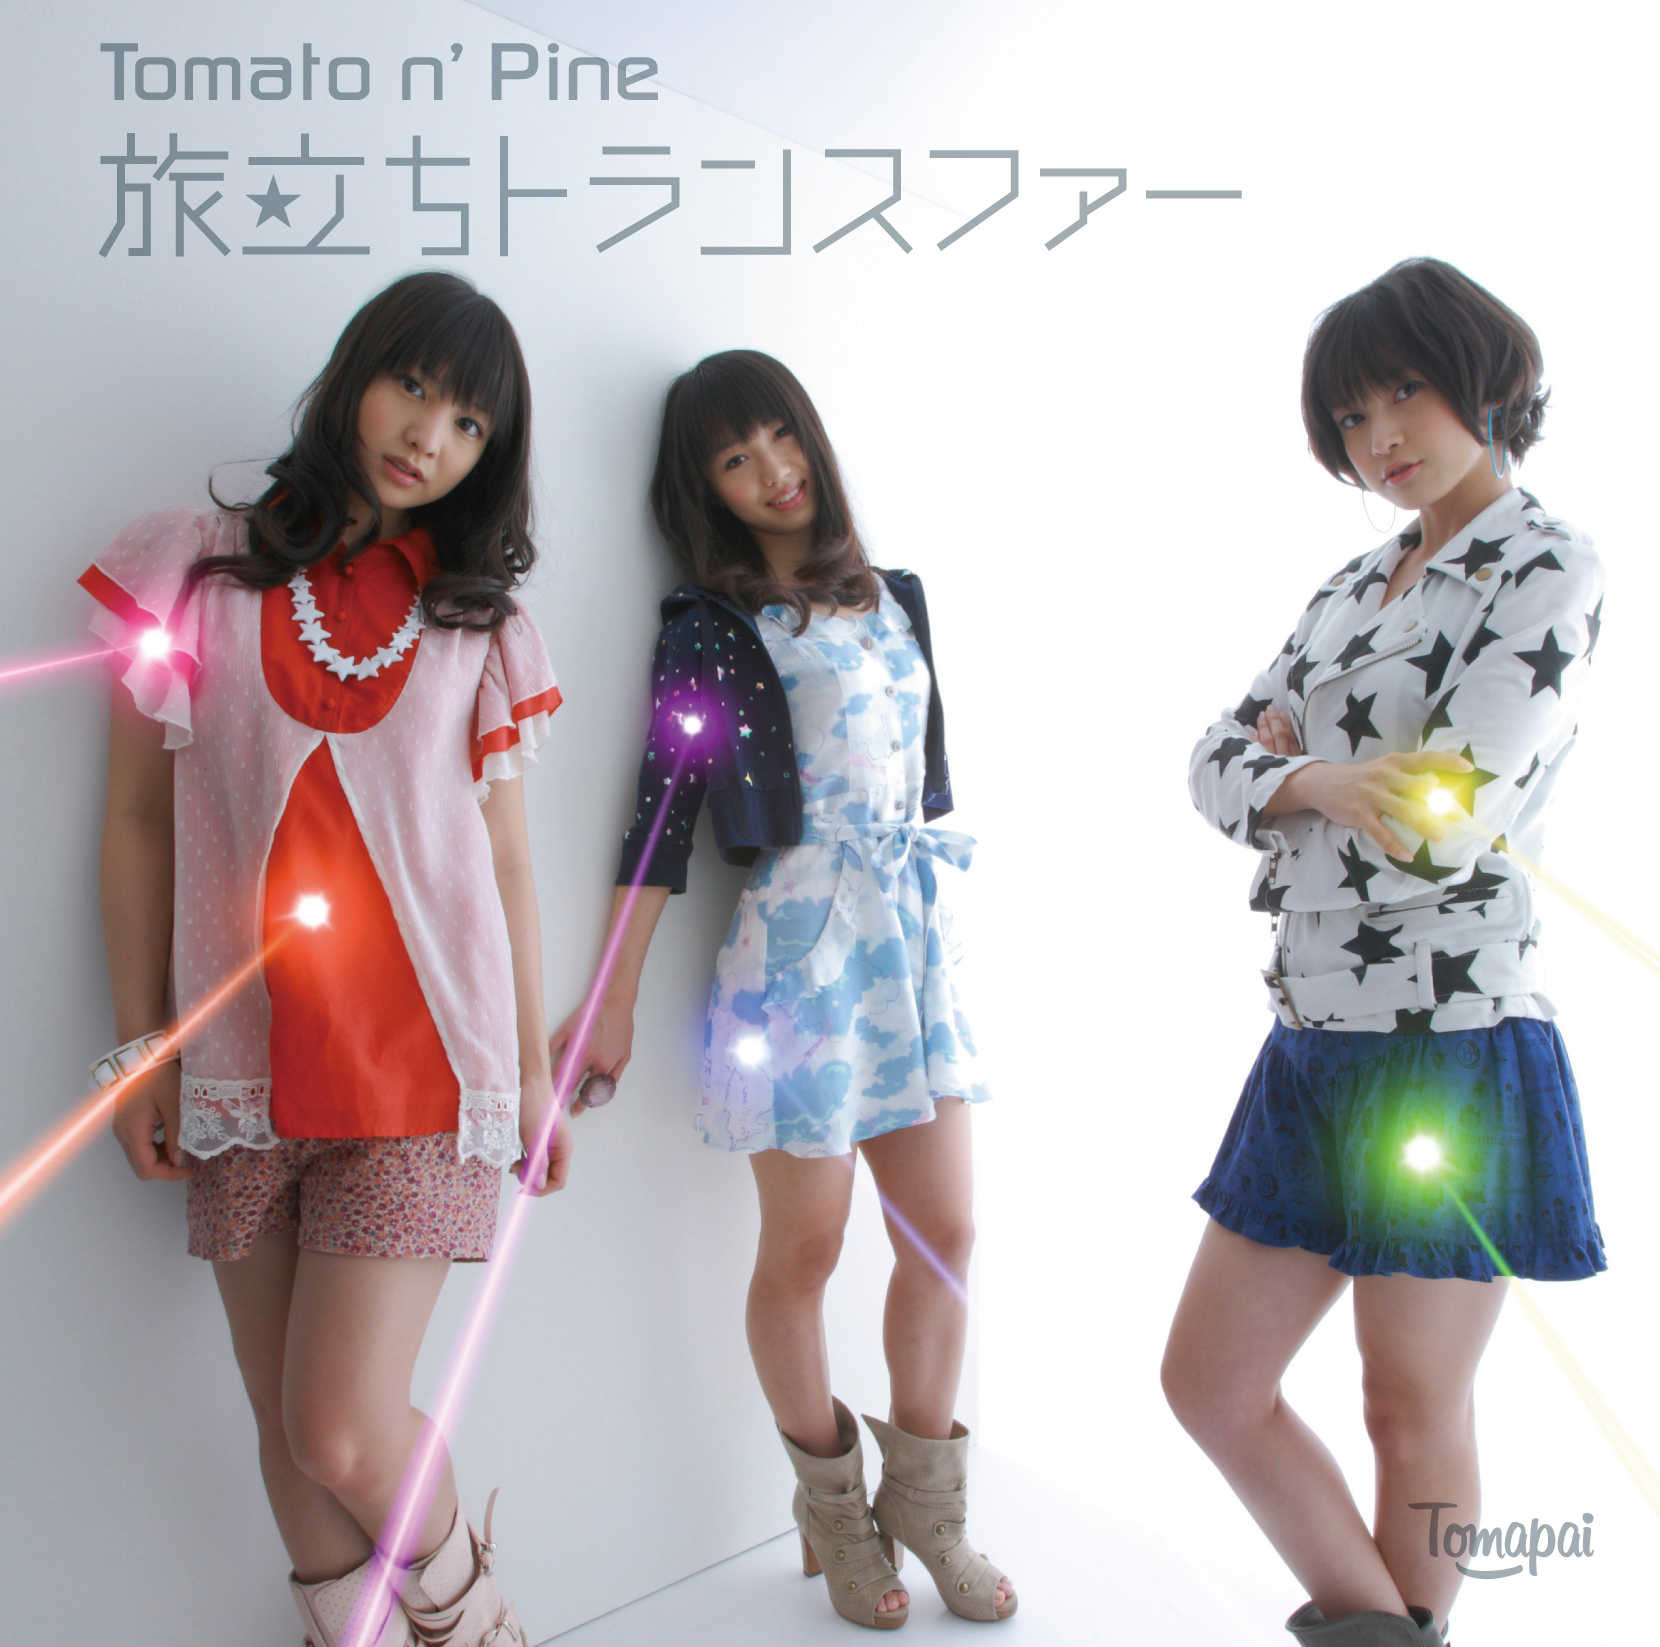 Tomato n Pine - キャプテンは君だ! (dancefloor will never die remix)